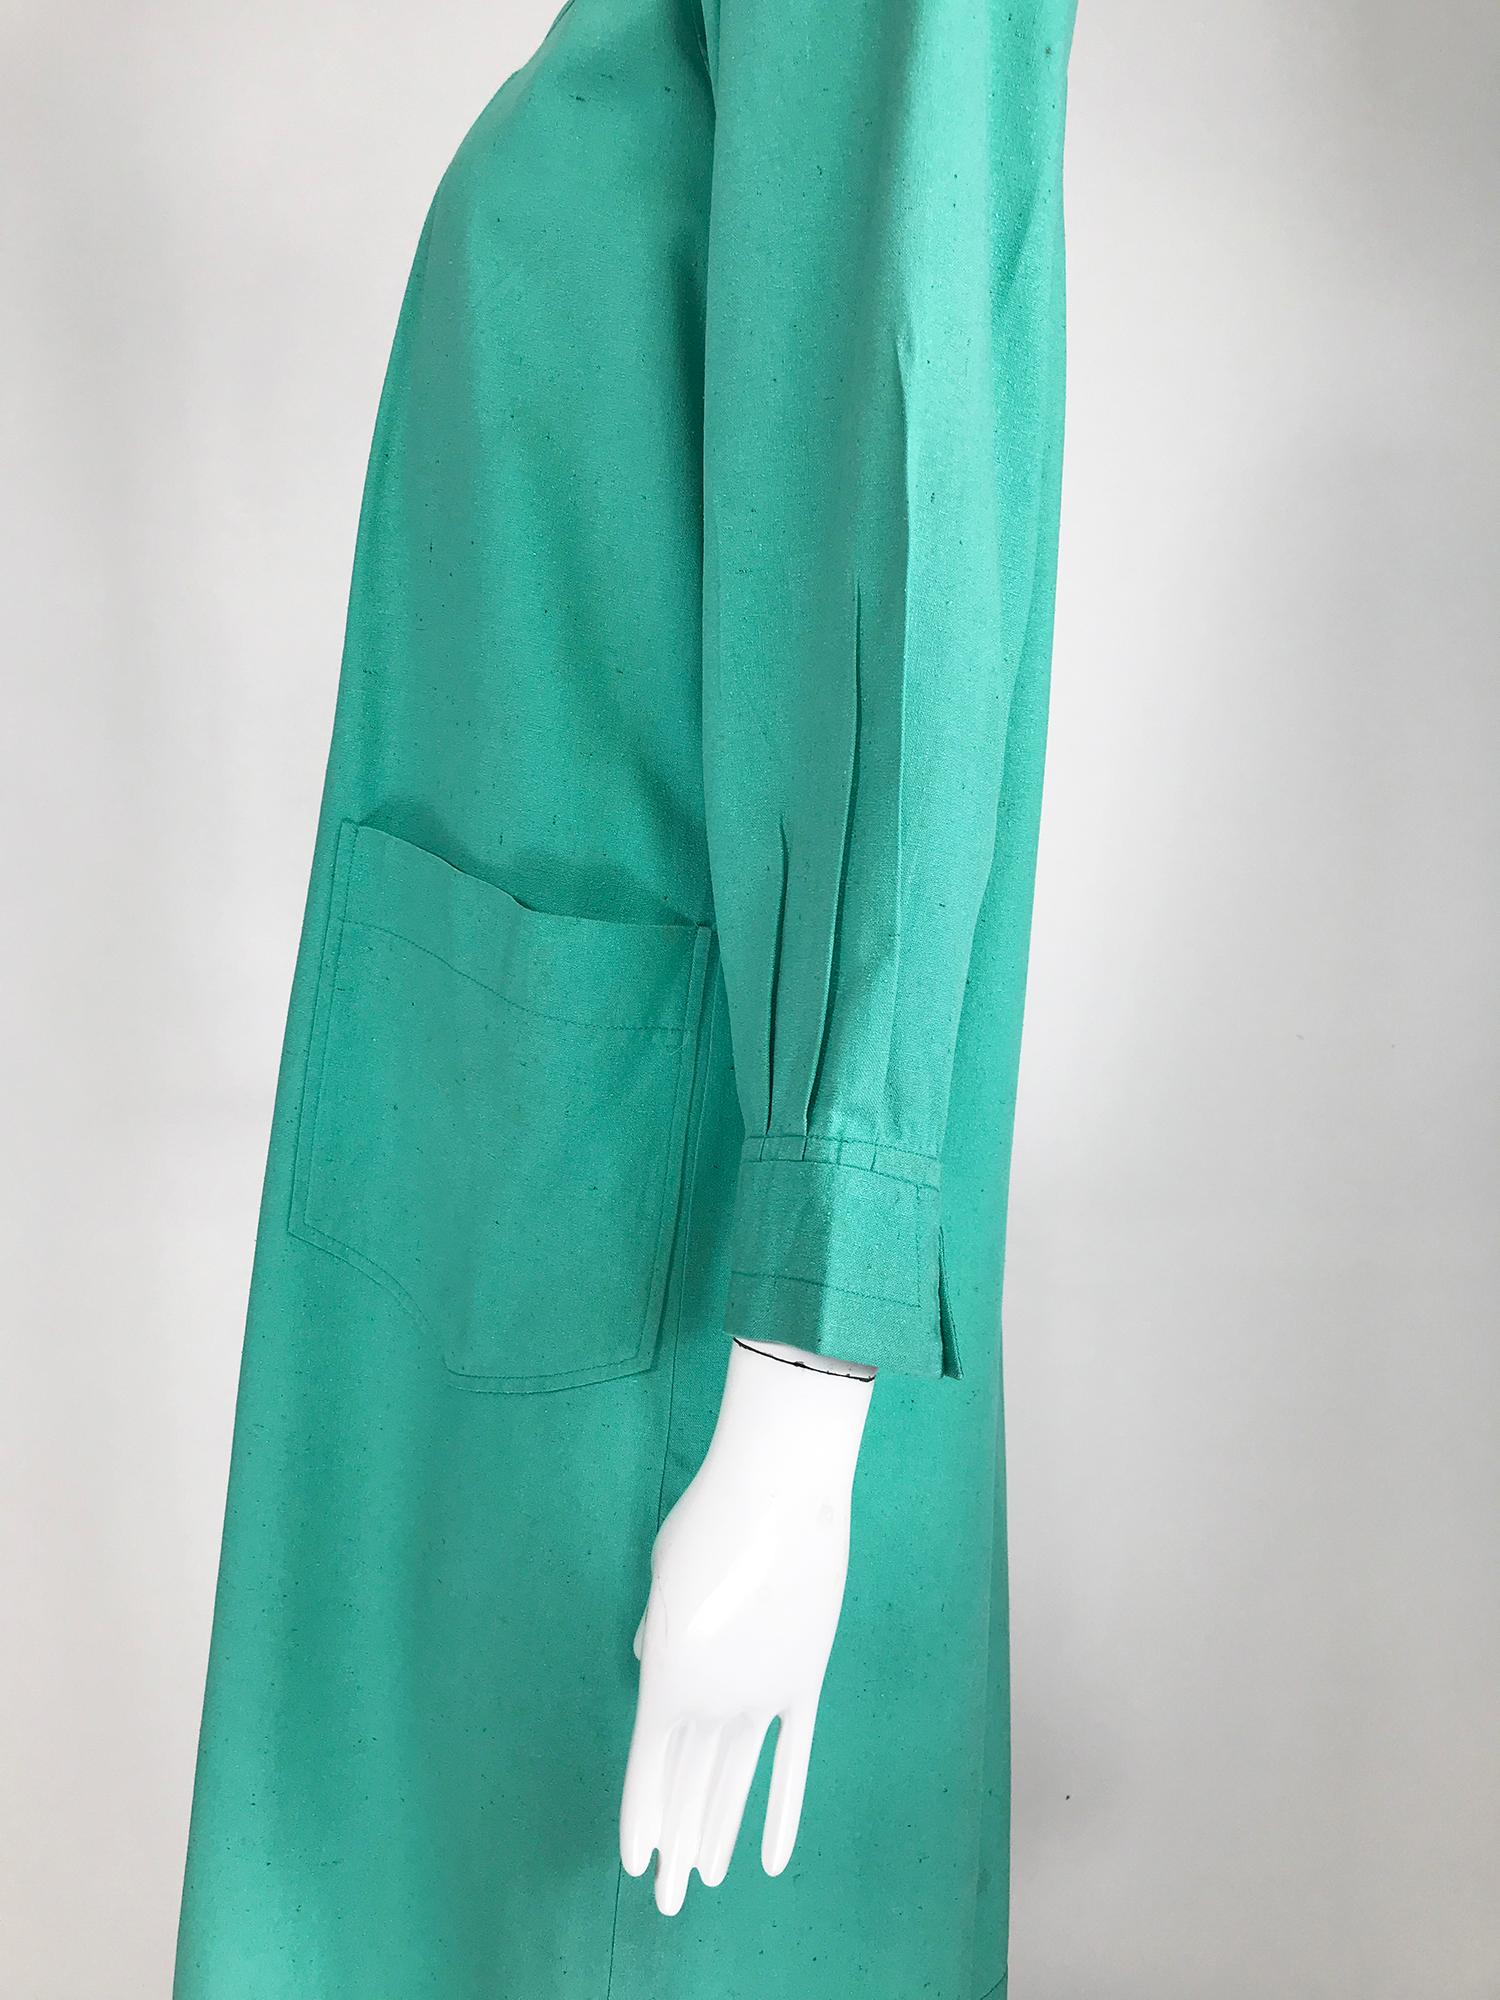 Yves Saint Laurent Rive Gauche Aqua Slub Silk Smock Dress 1970s 4